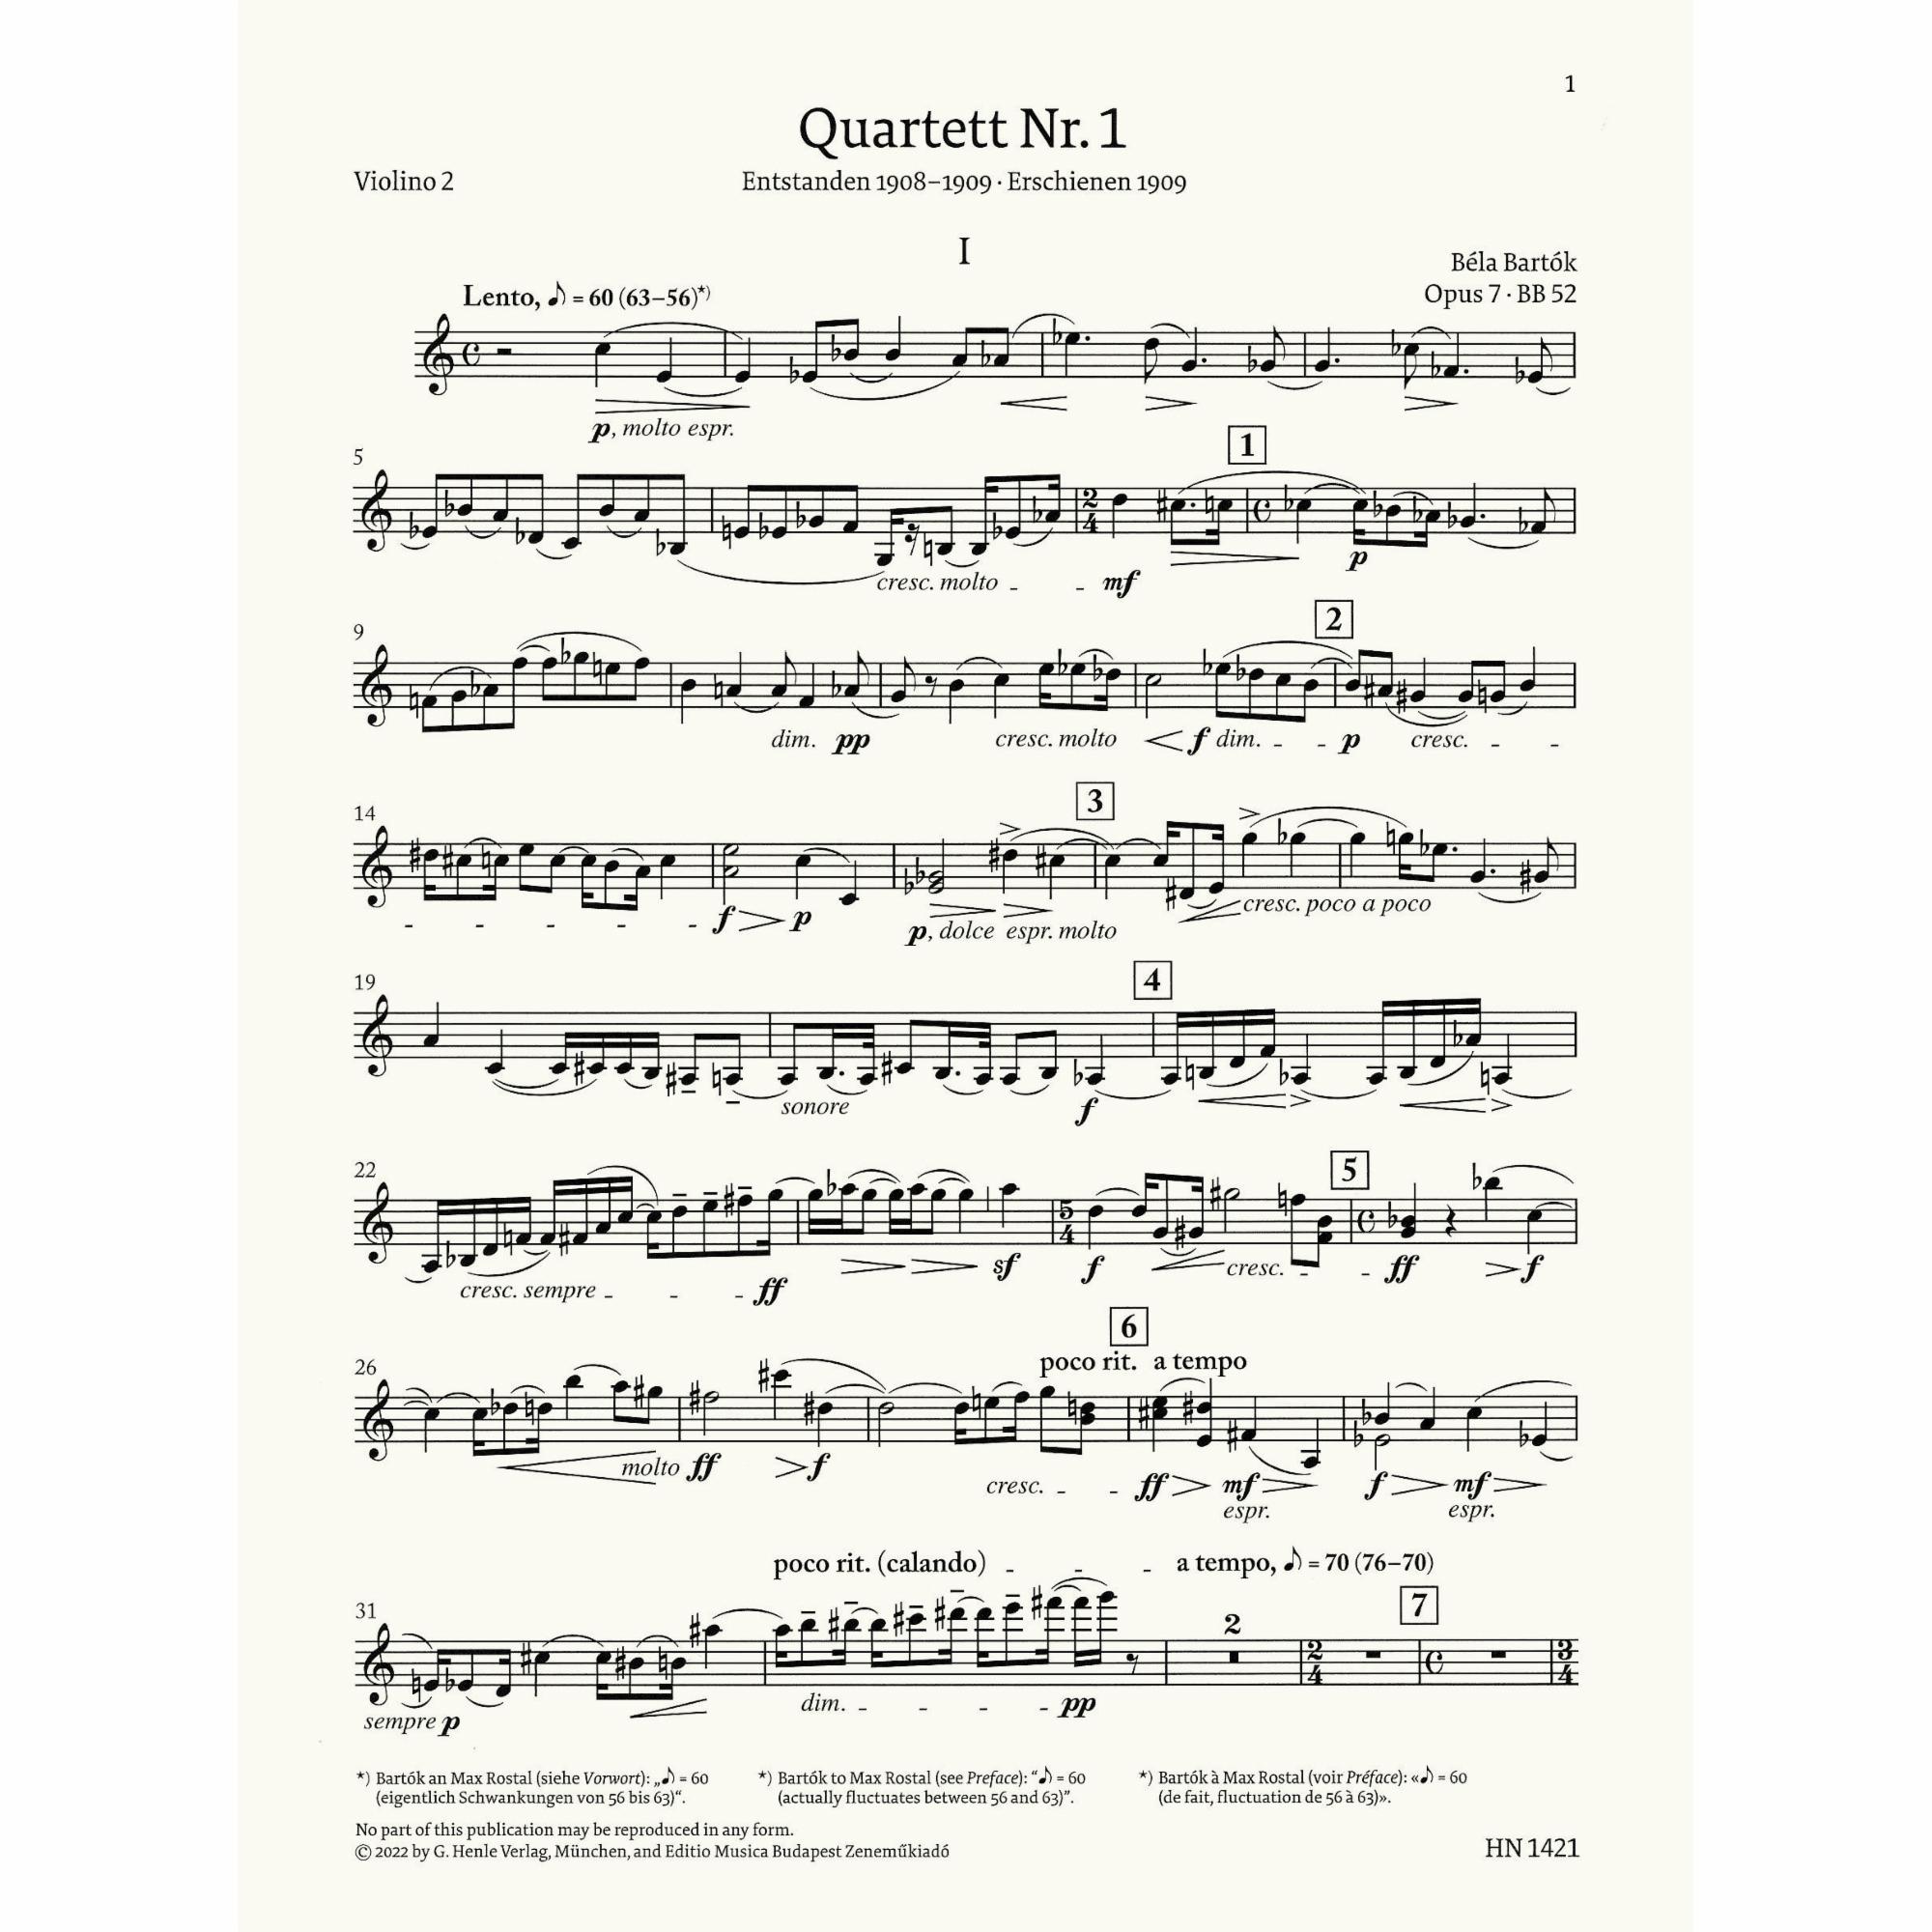 Sample: Violin II Part